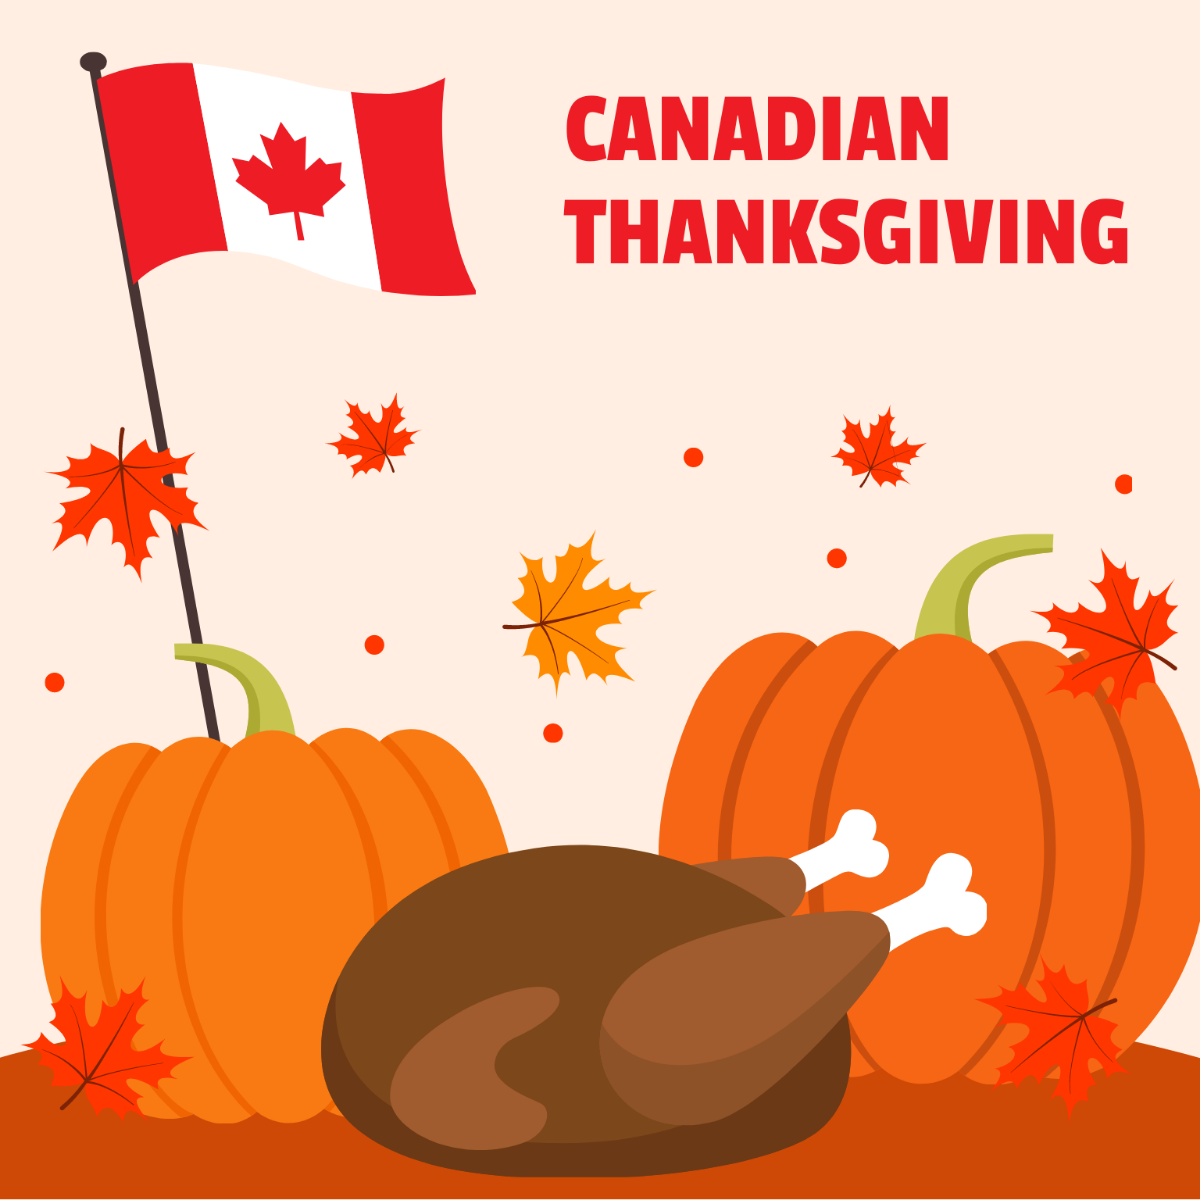 Canadian Thanksgiving Illustration Template